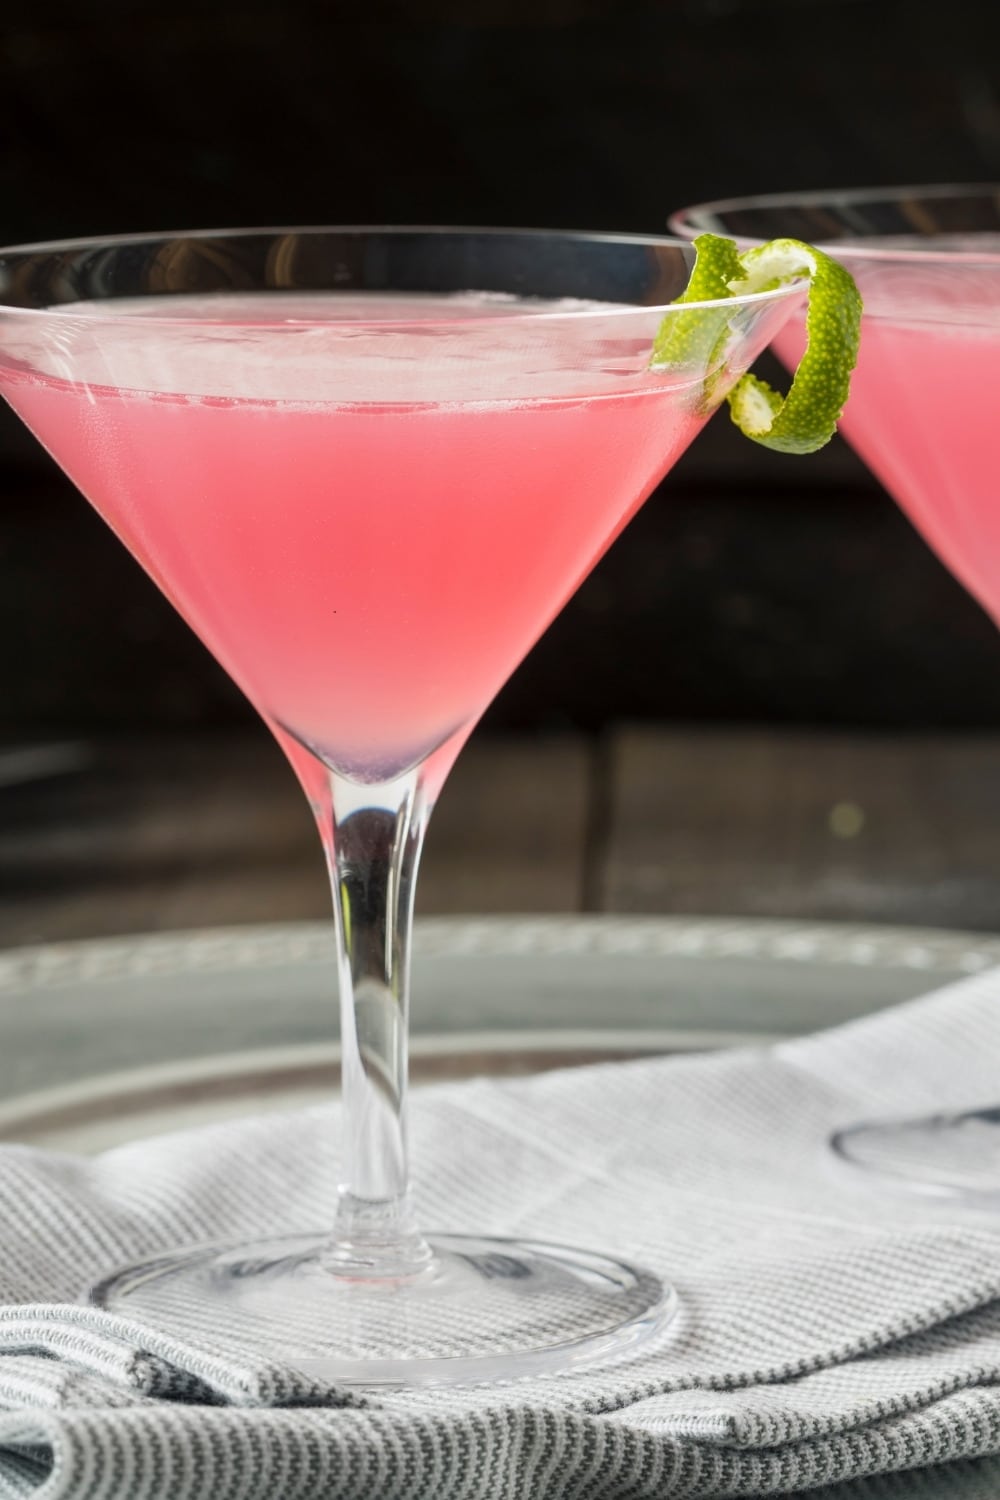 Pink Whitney Drink Recipe (+ 10 Variation Ideas)